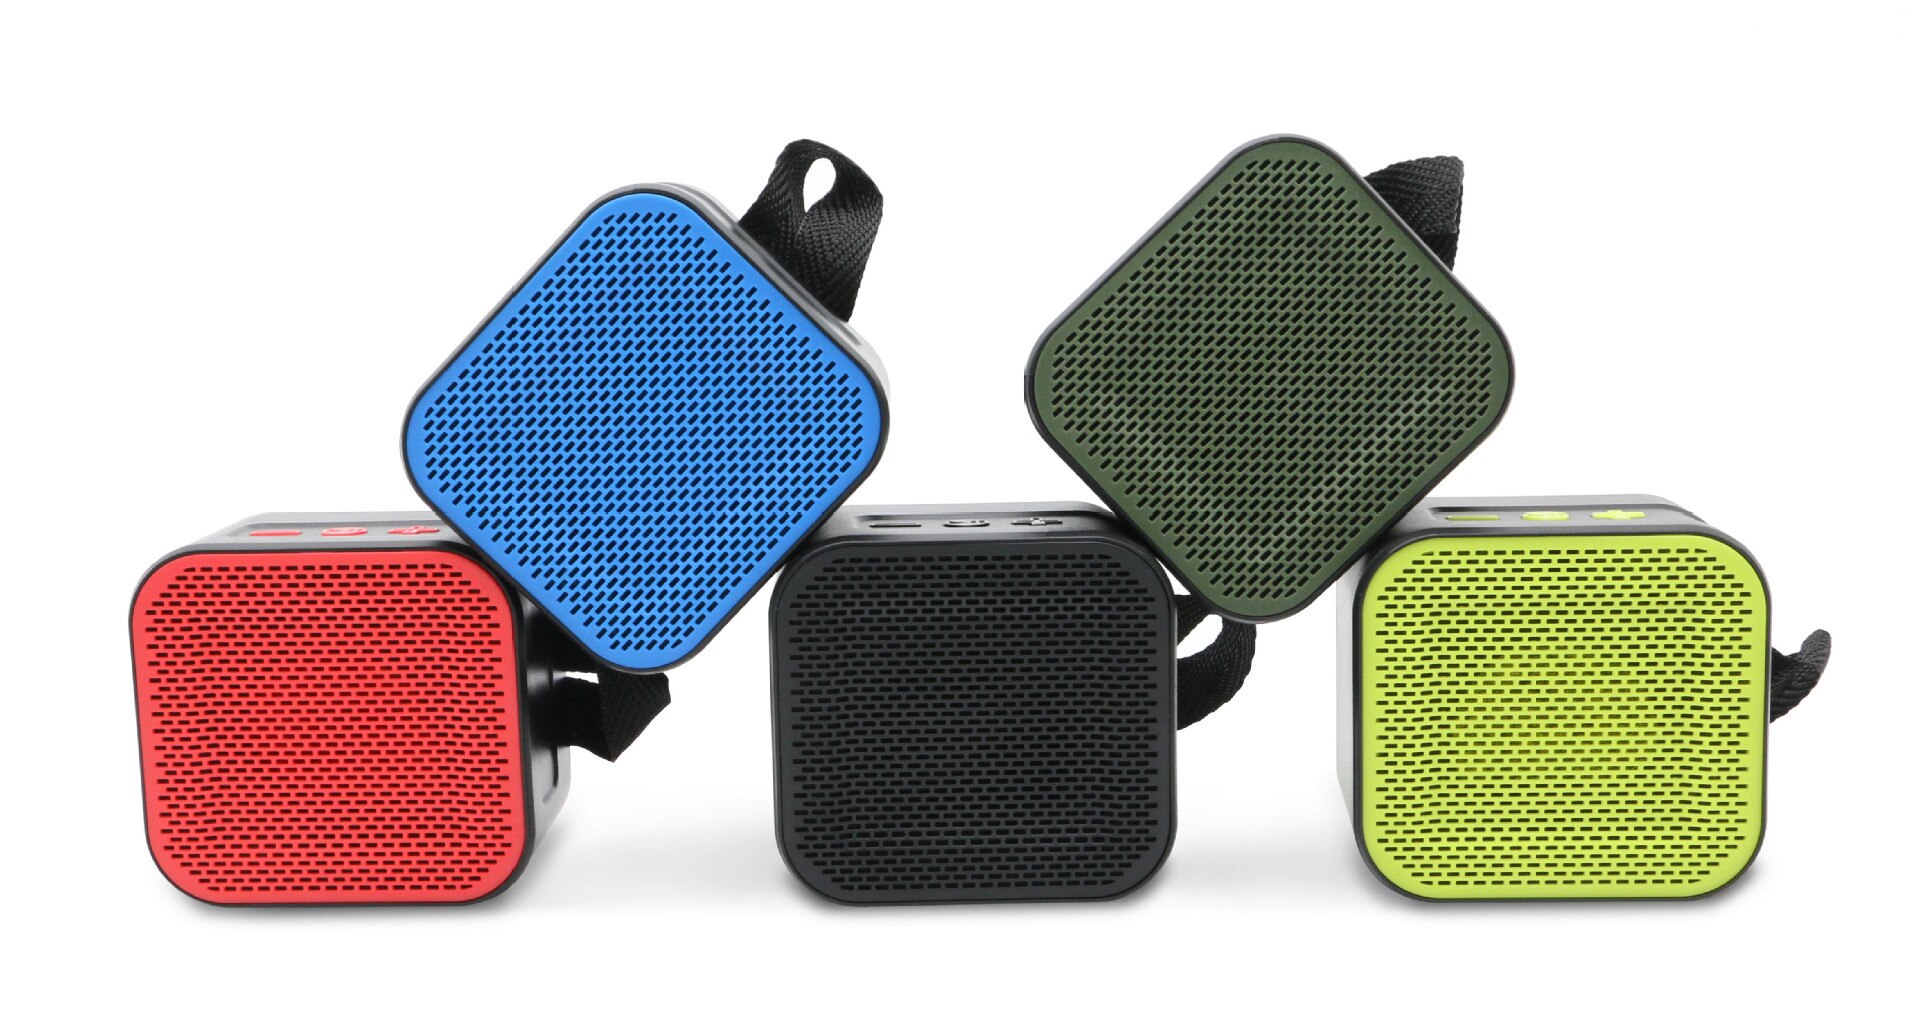 Led Touch Draagbare Mini Draadloze Bluetooth Speakers Handsfree Ondersteuning Tf Card Sound Muziek Met Hd Geluid